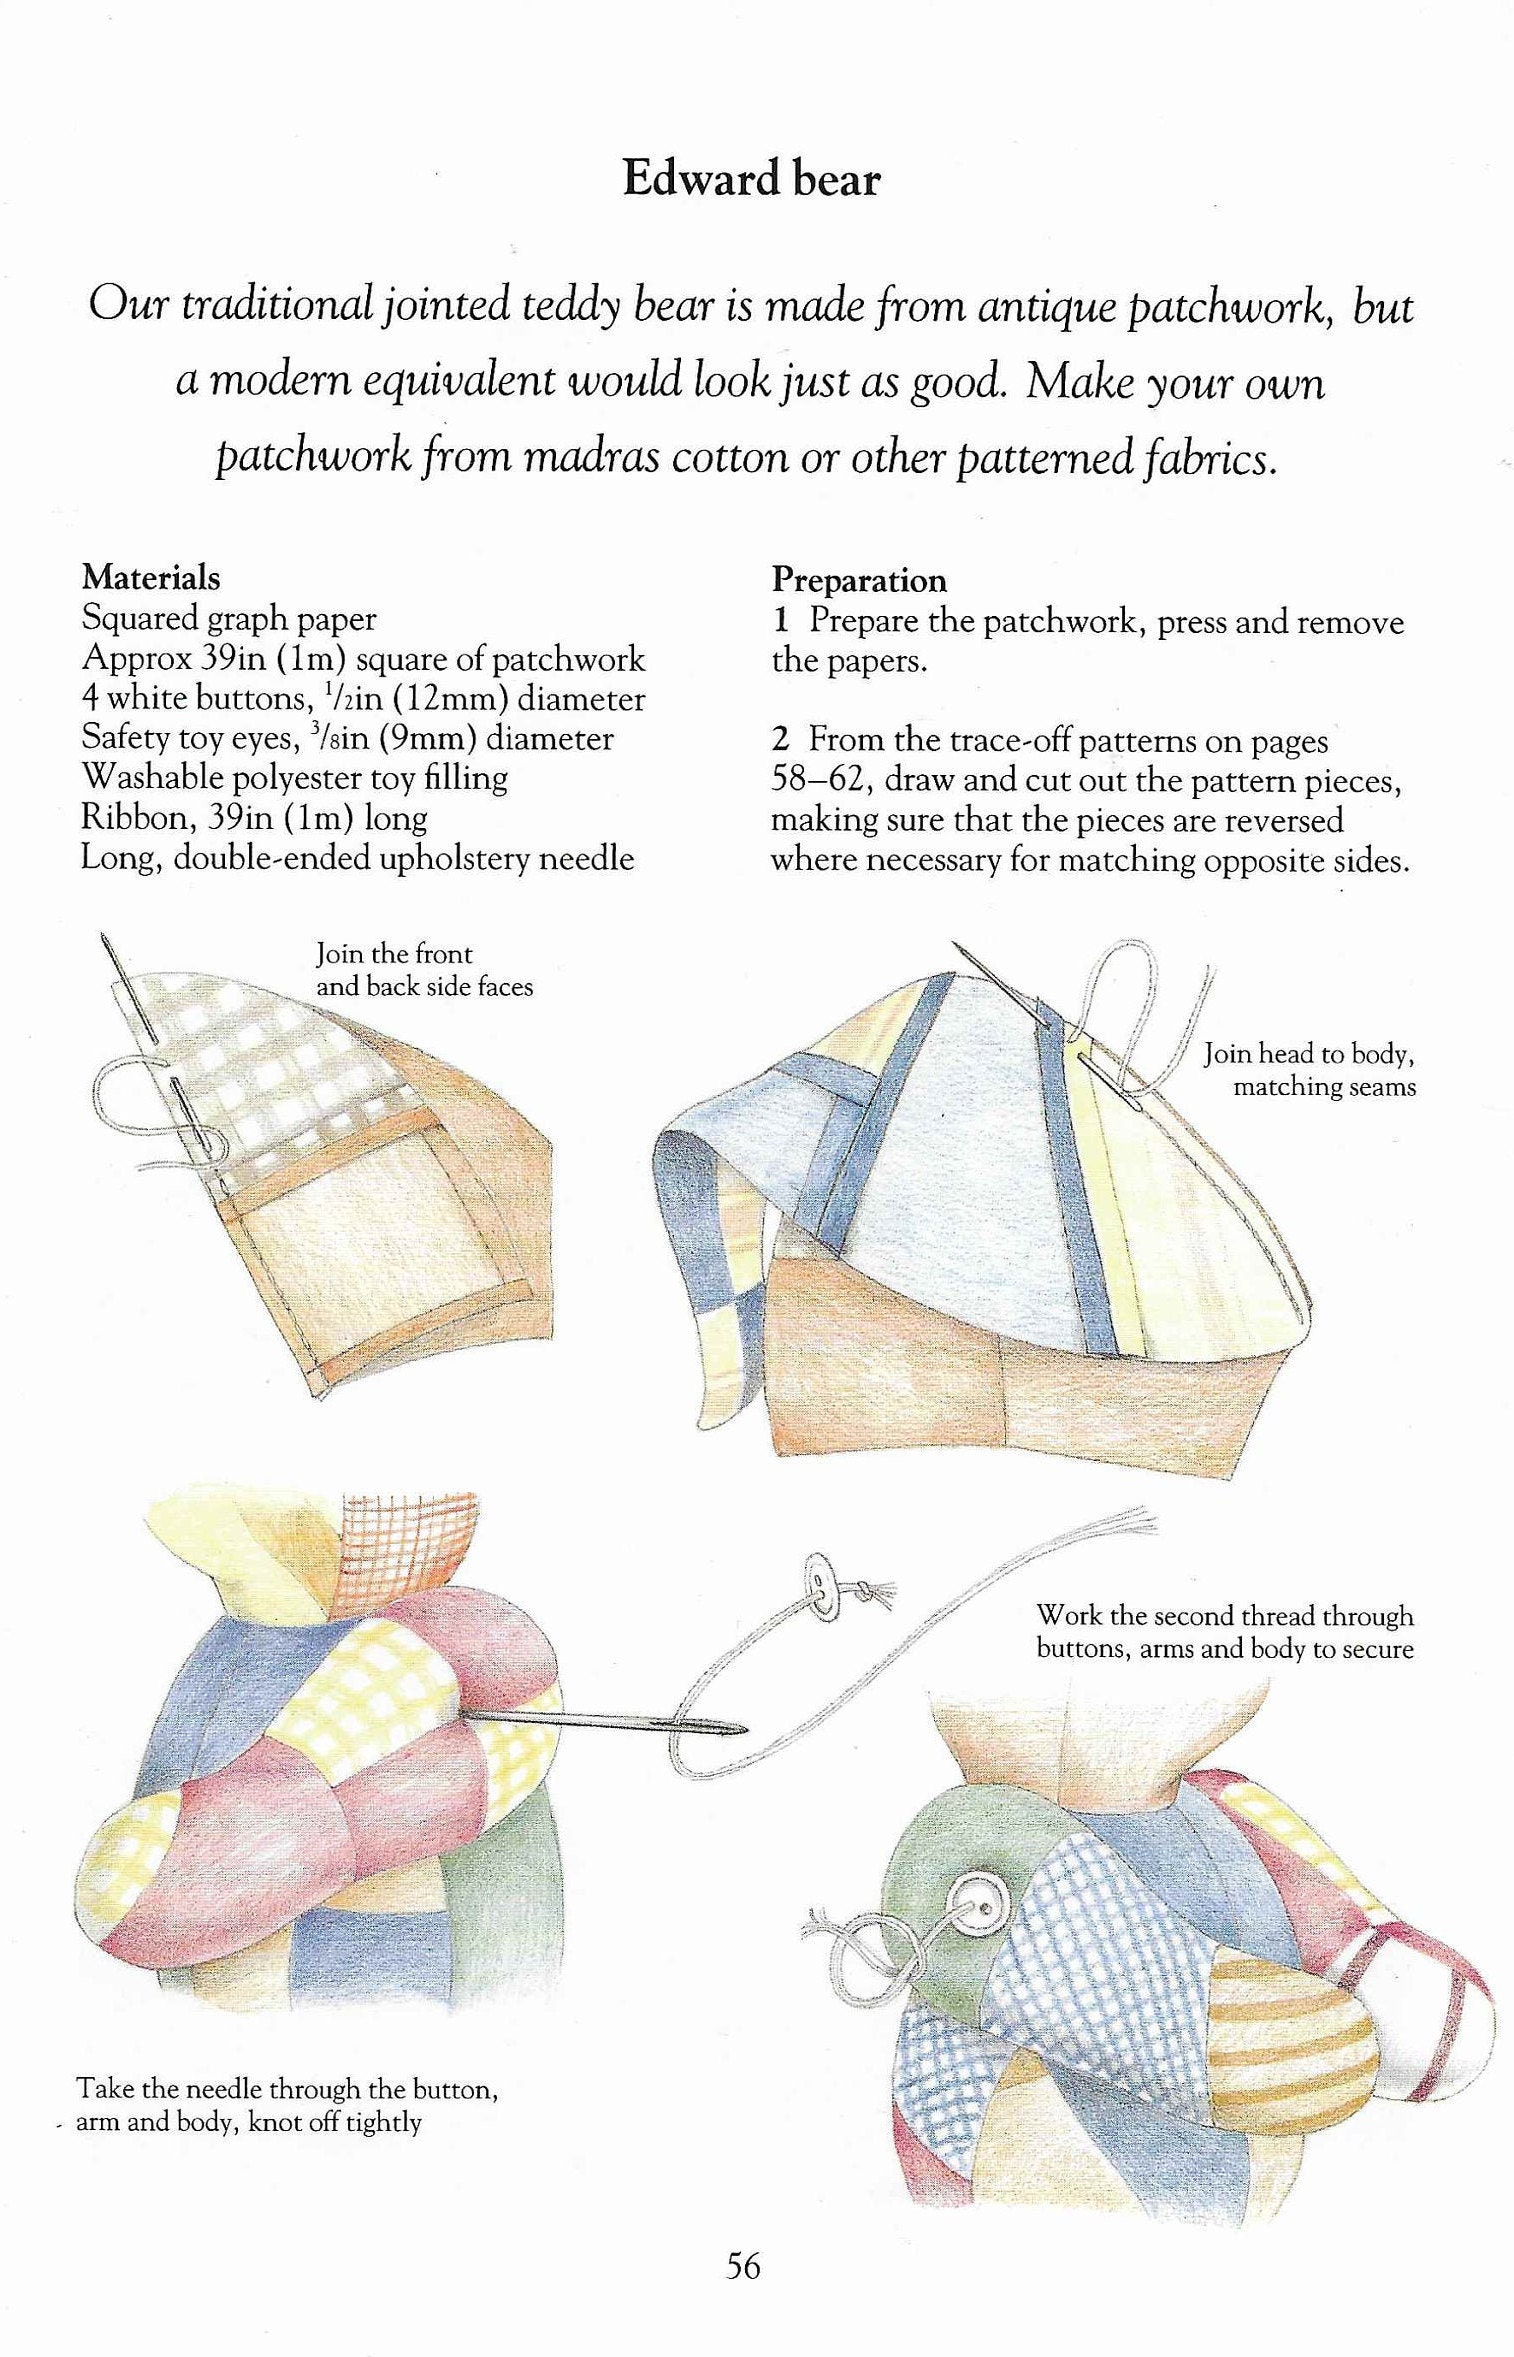 🌸 EASY 🌸 Beginners Memory Teddy Bear Plush PDF Sewing Patterns 🖨️ –  Aloha Sewing Company